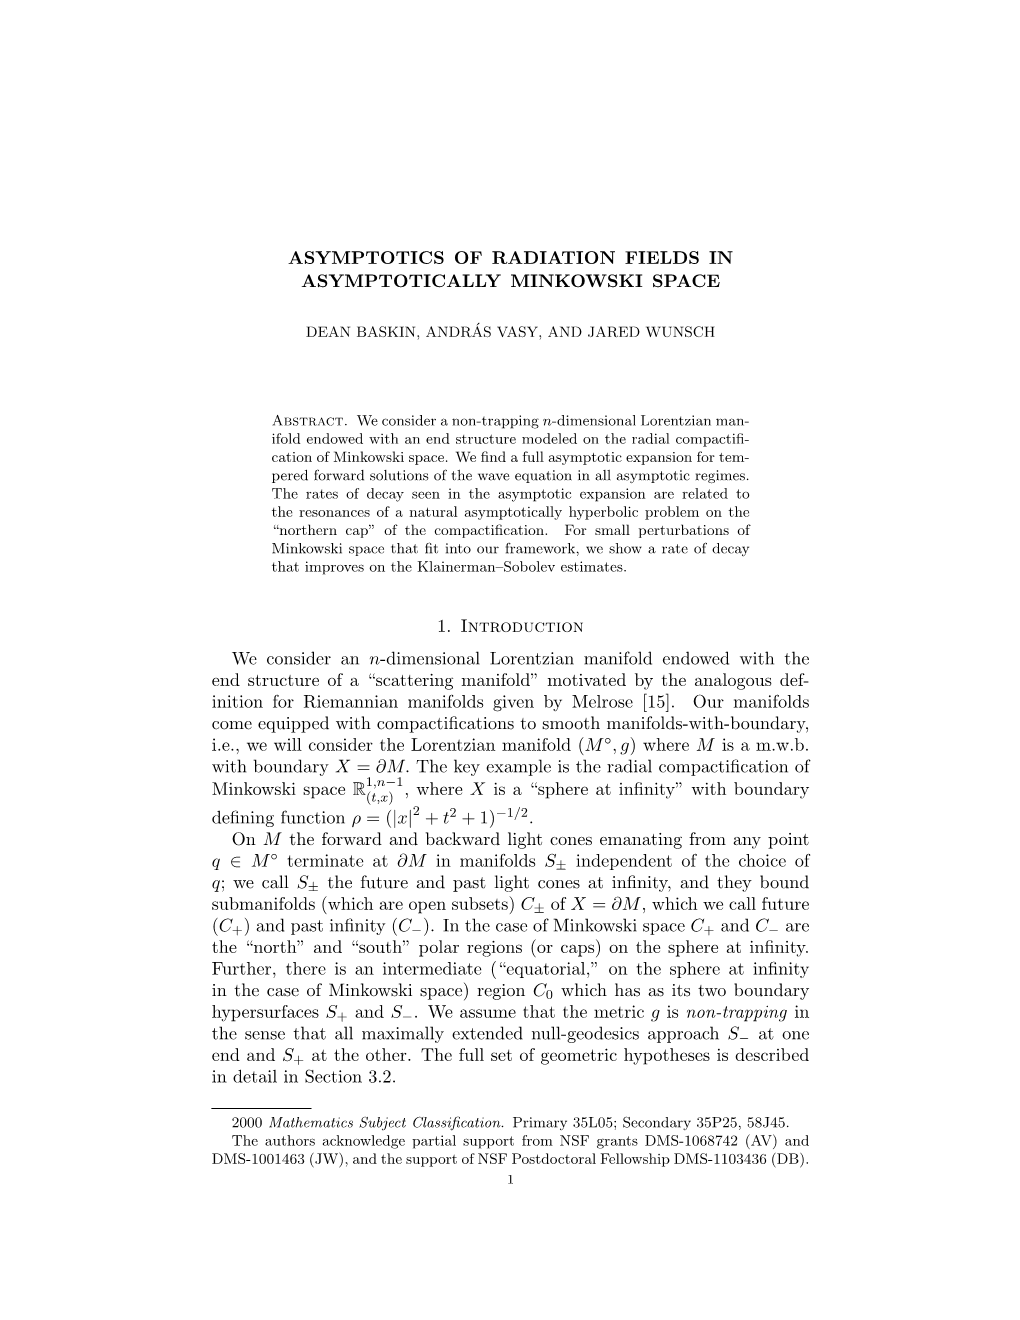 ASYMPTOTICS of RADIATION FIELDS in ASYMPTOTICALLY MINKOWSKI SPACE 1. Introduction We Consider an N-Dimensional Lorentzian Manifo